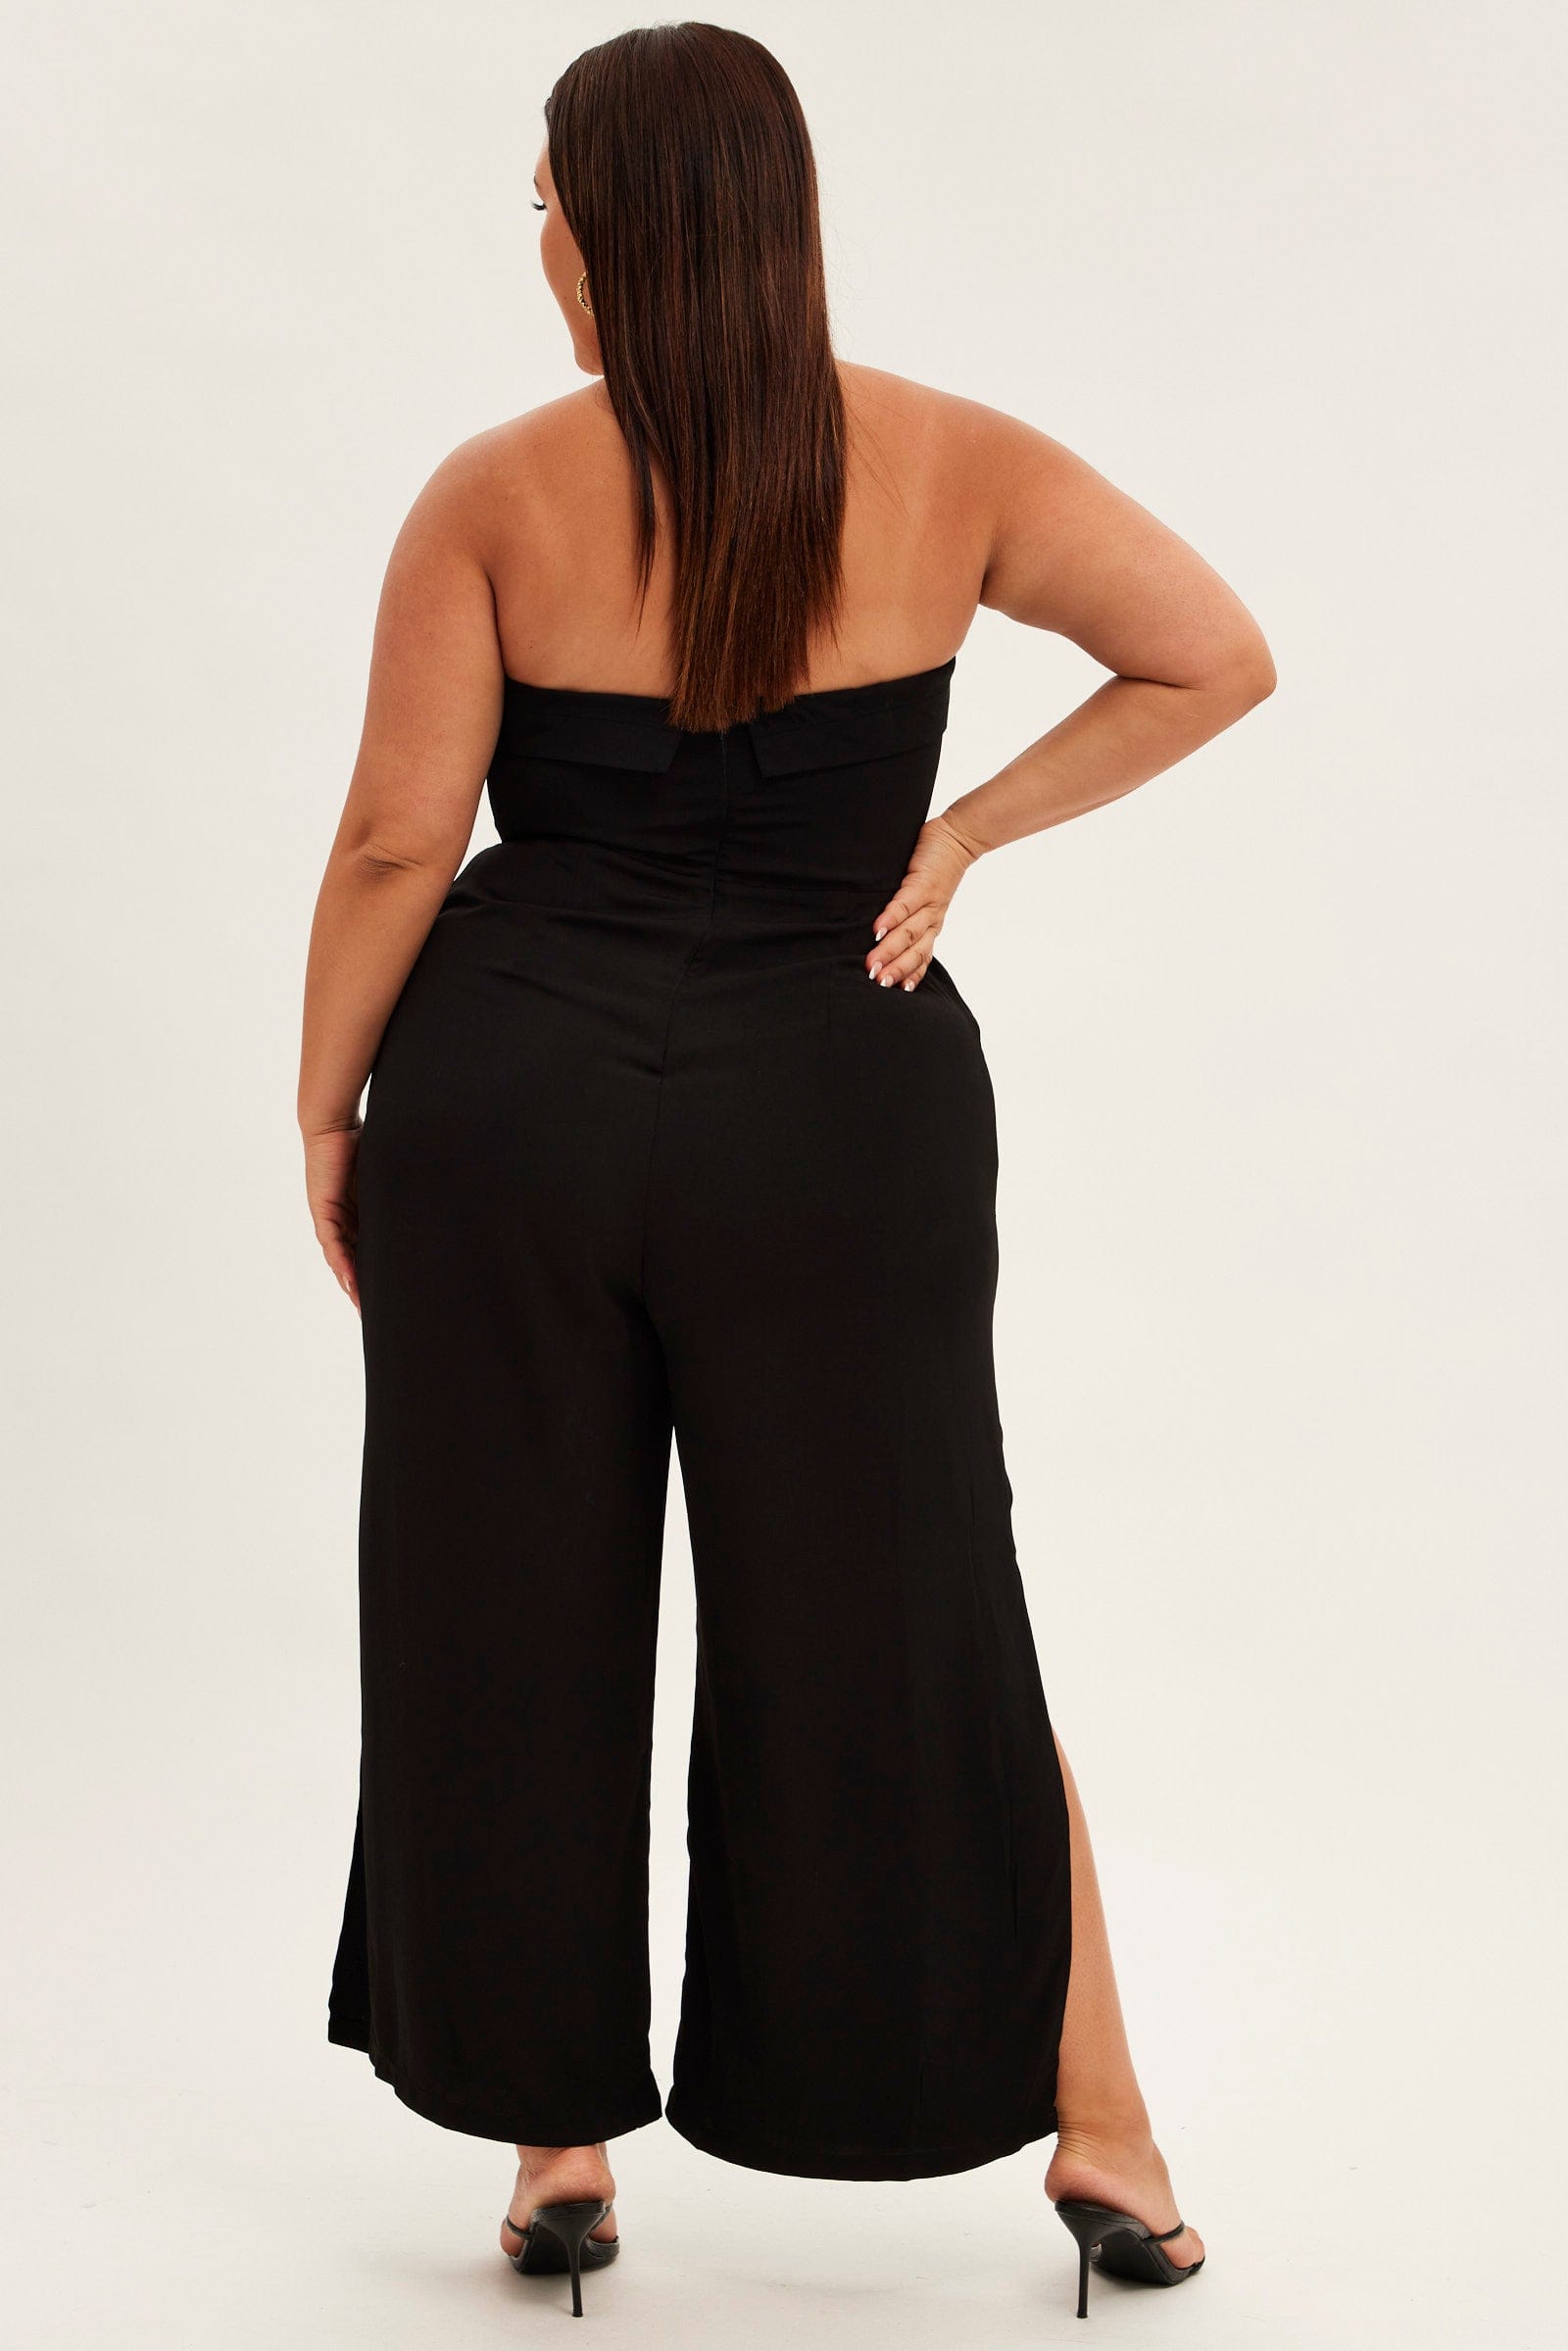 Black Strapless Jumpsuit Detachable Straps Split Leg for YouandAll Fashion